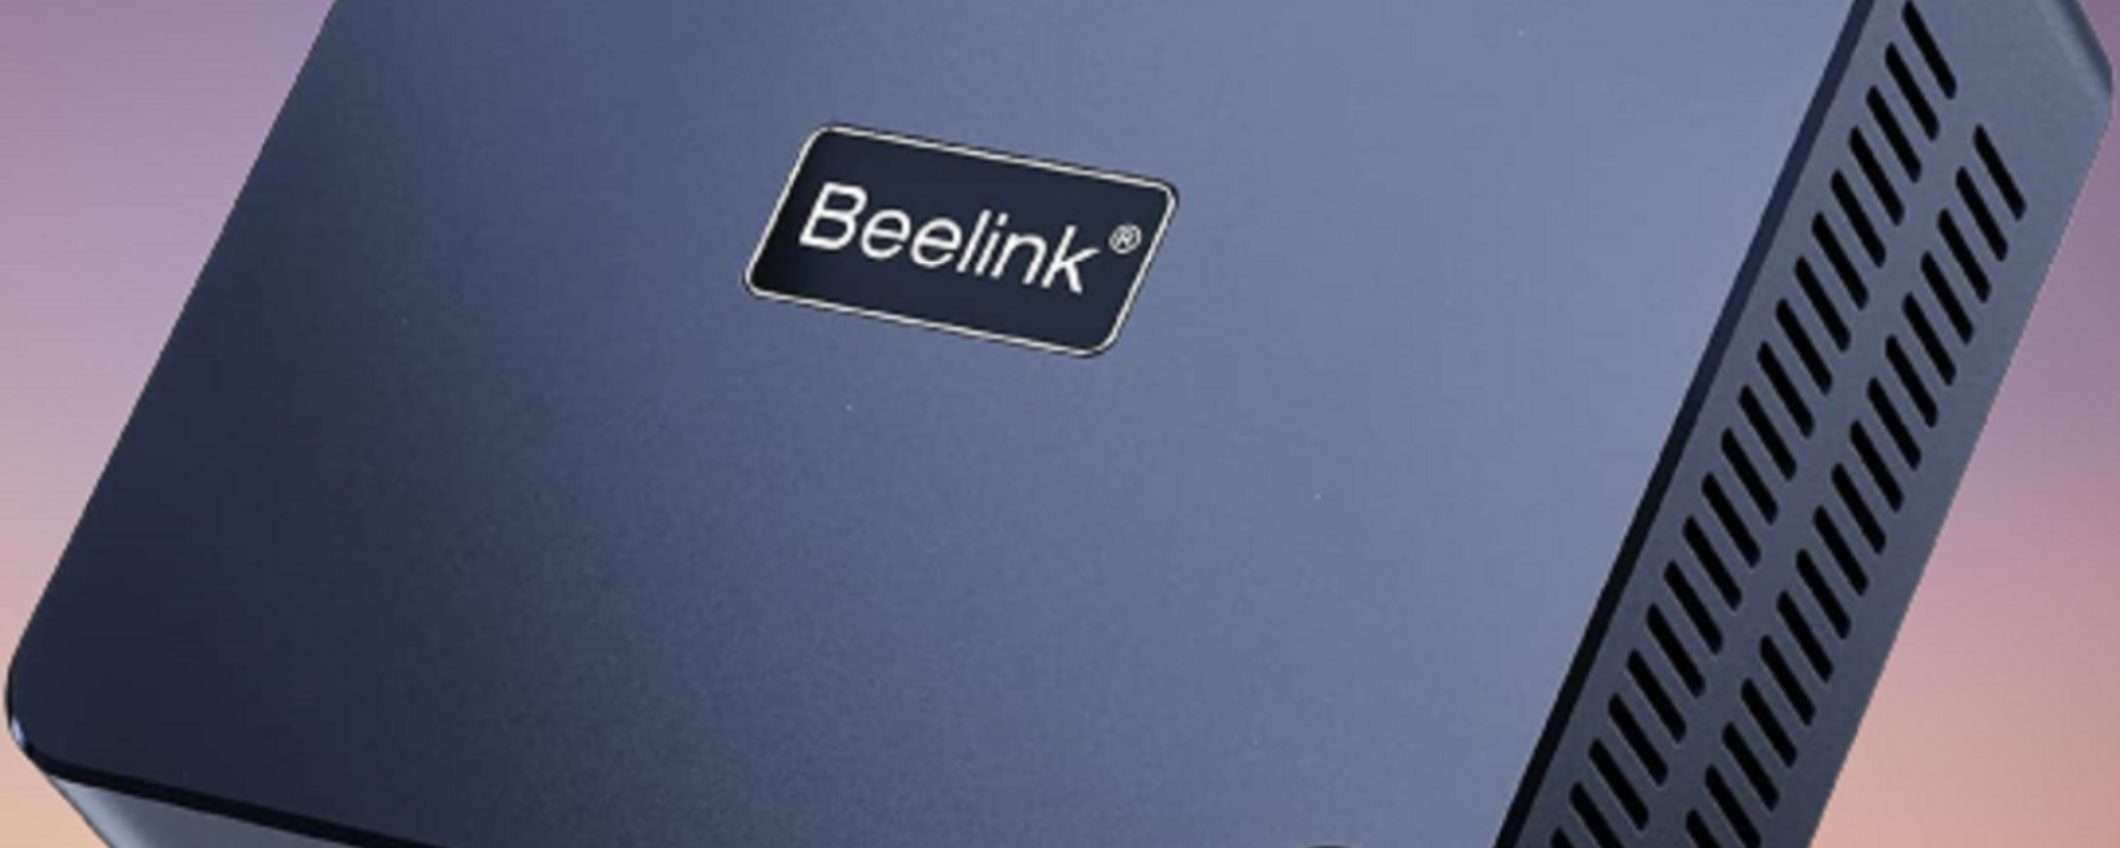 Mini PC Beelink U59 Pro 16GB RAM e 500GB ROM a 100€ in meno